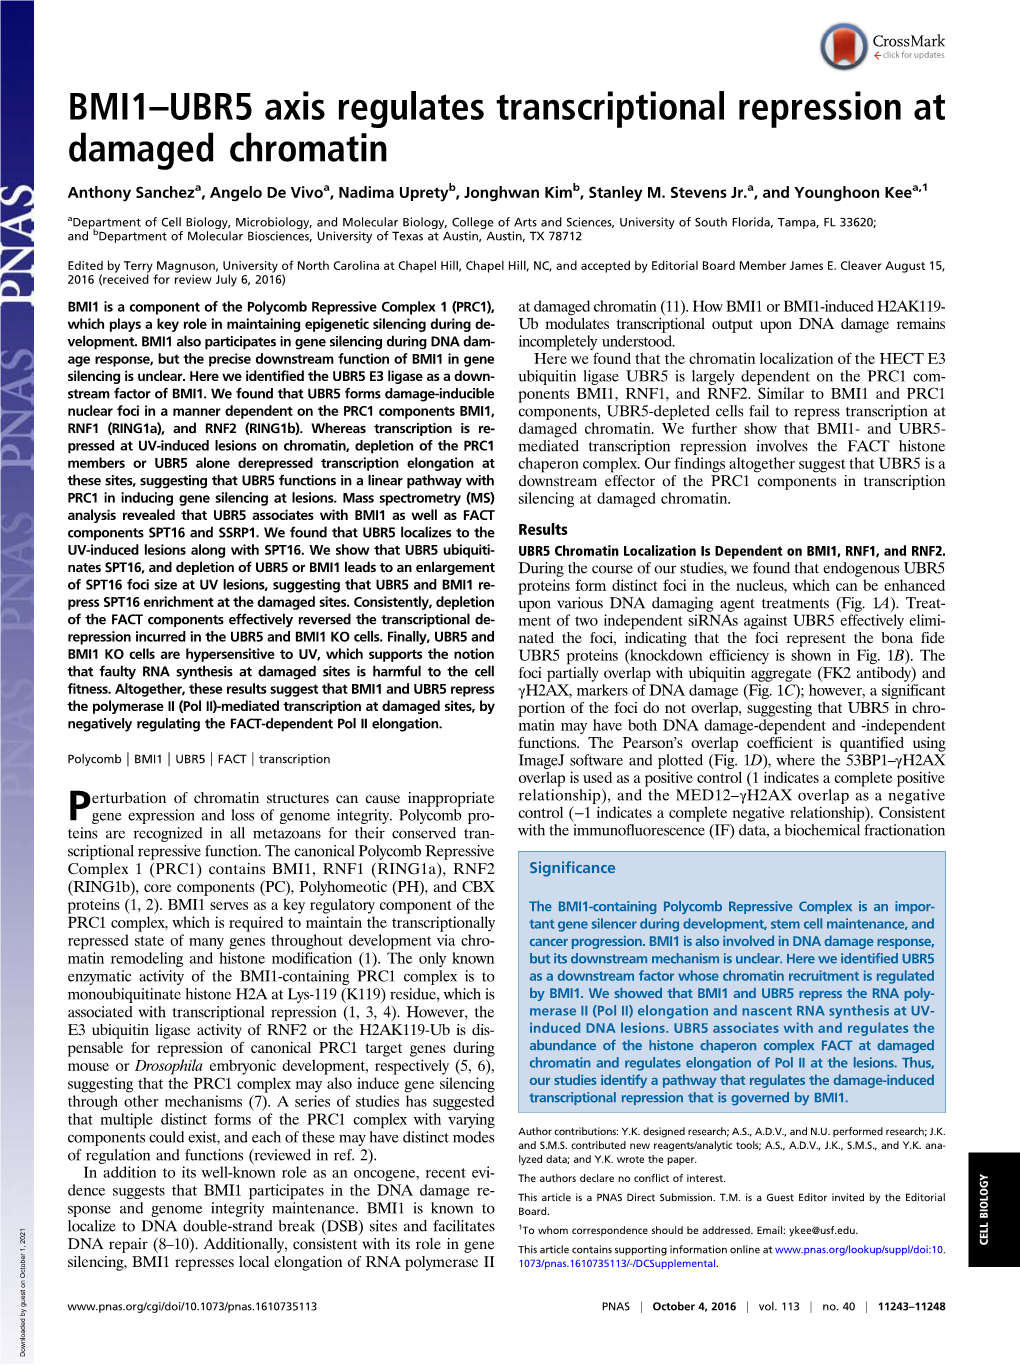 BMI1–UBR5 Axis Regulates Transcriptional Repression at Damaged Chromatin